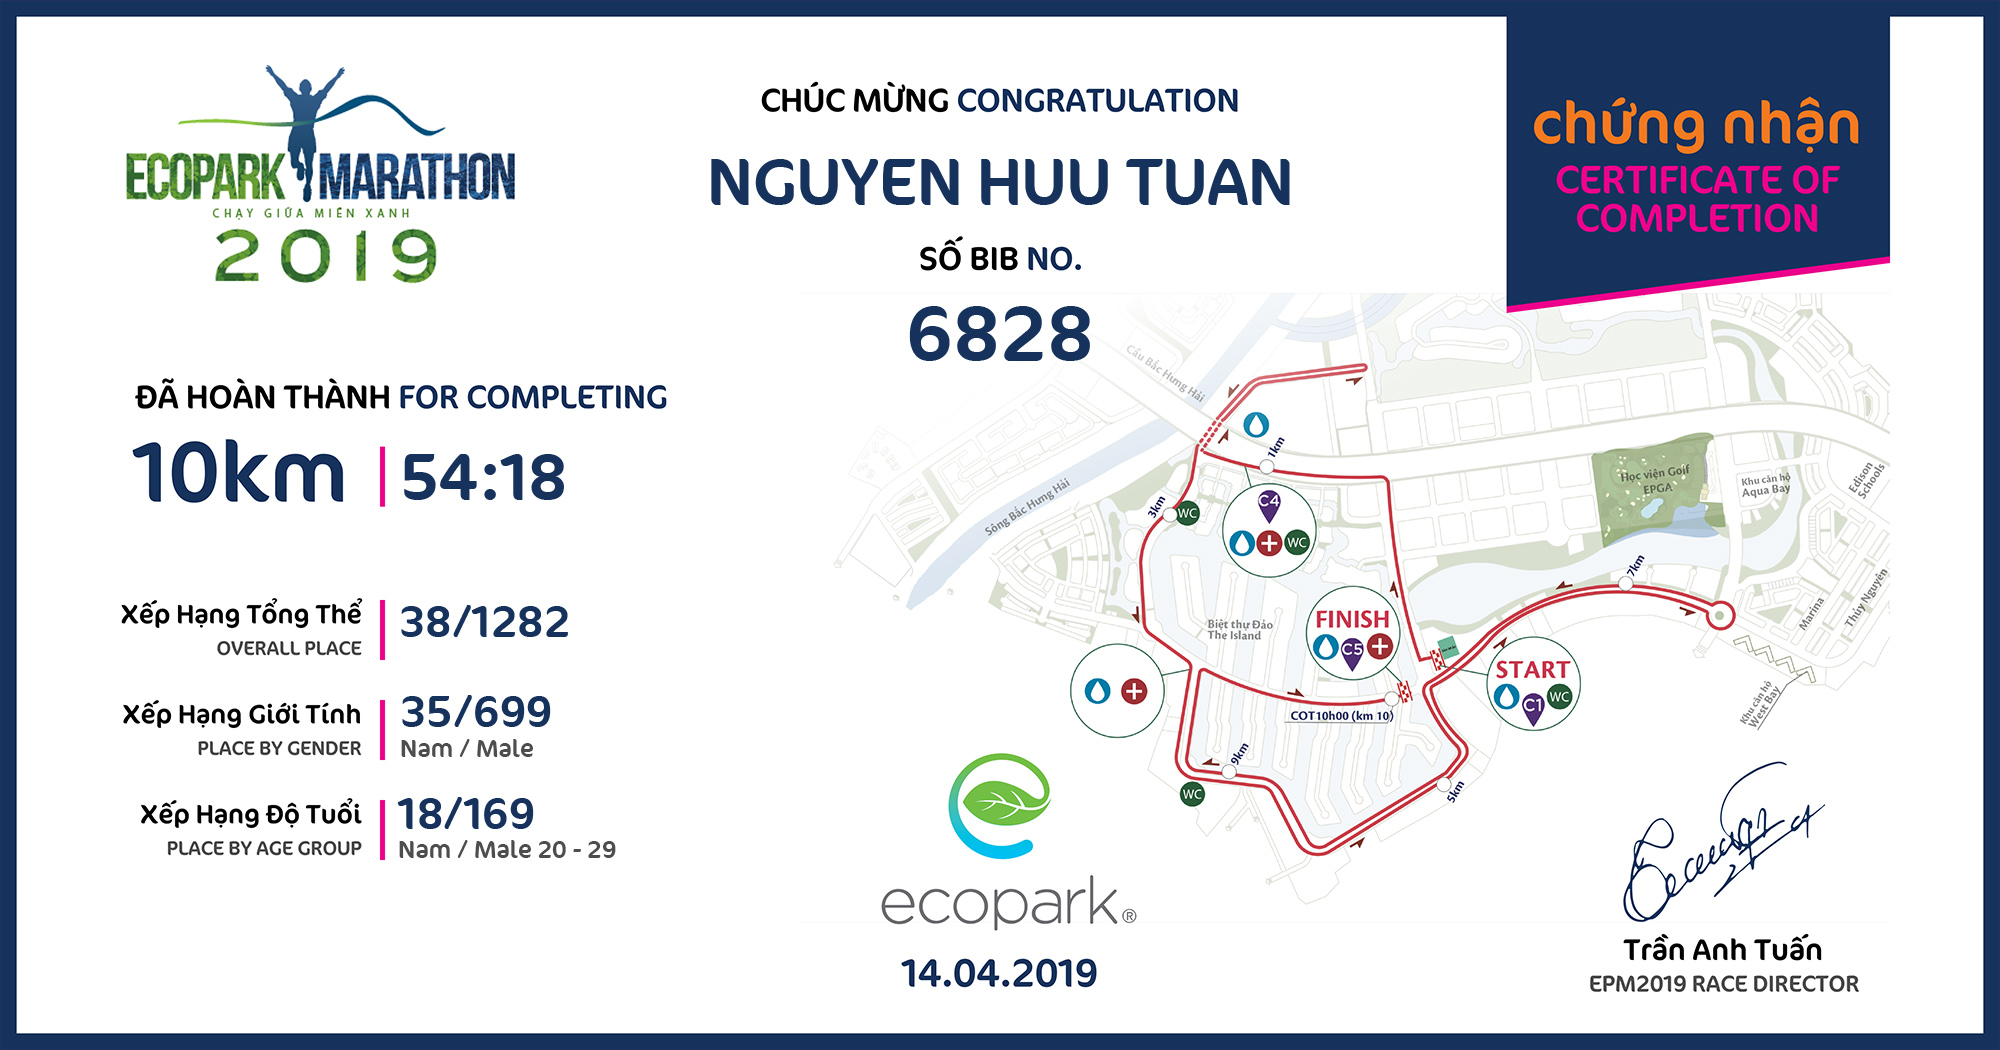 6828 - Nguyen Huu Tuan